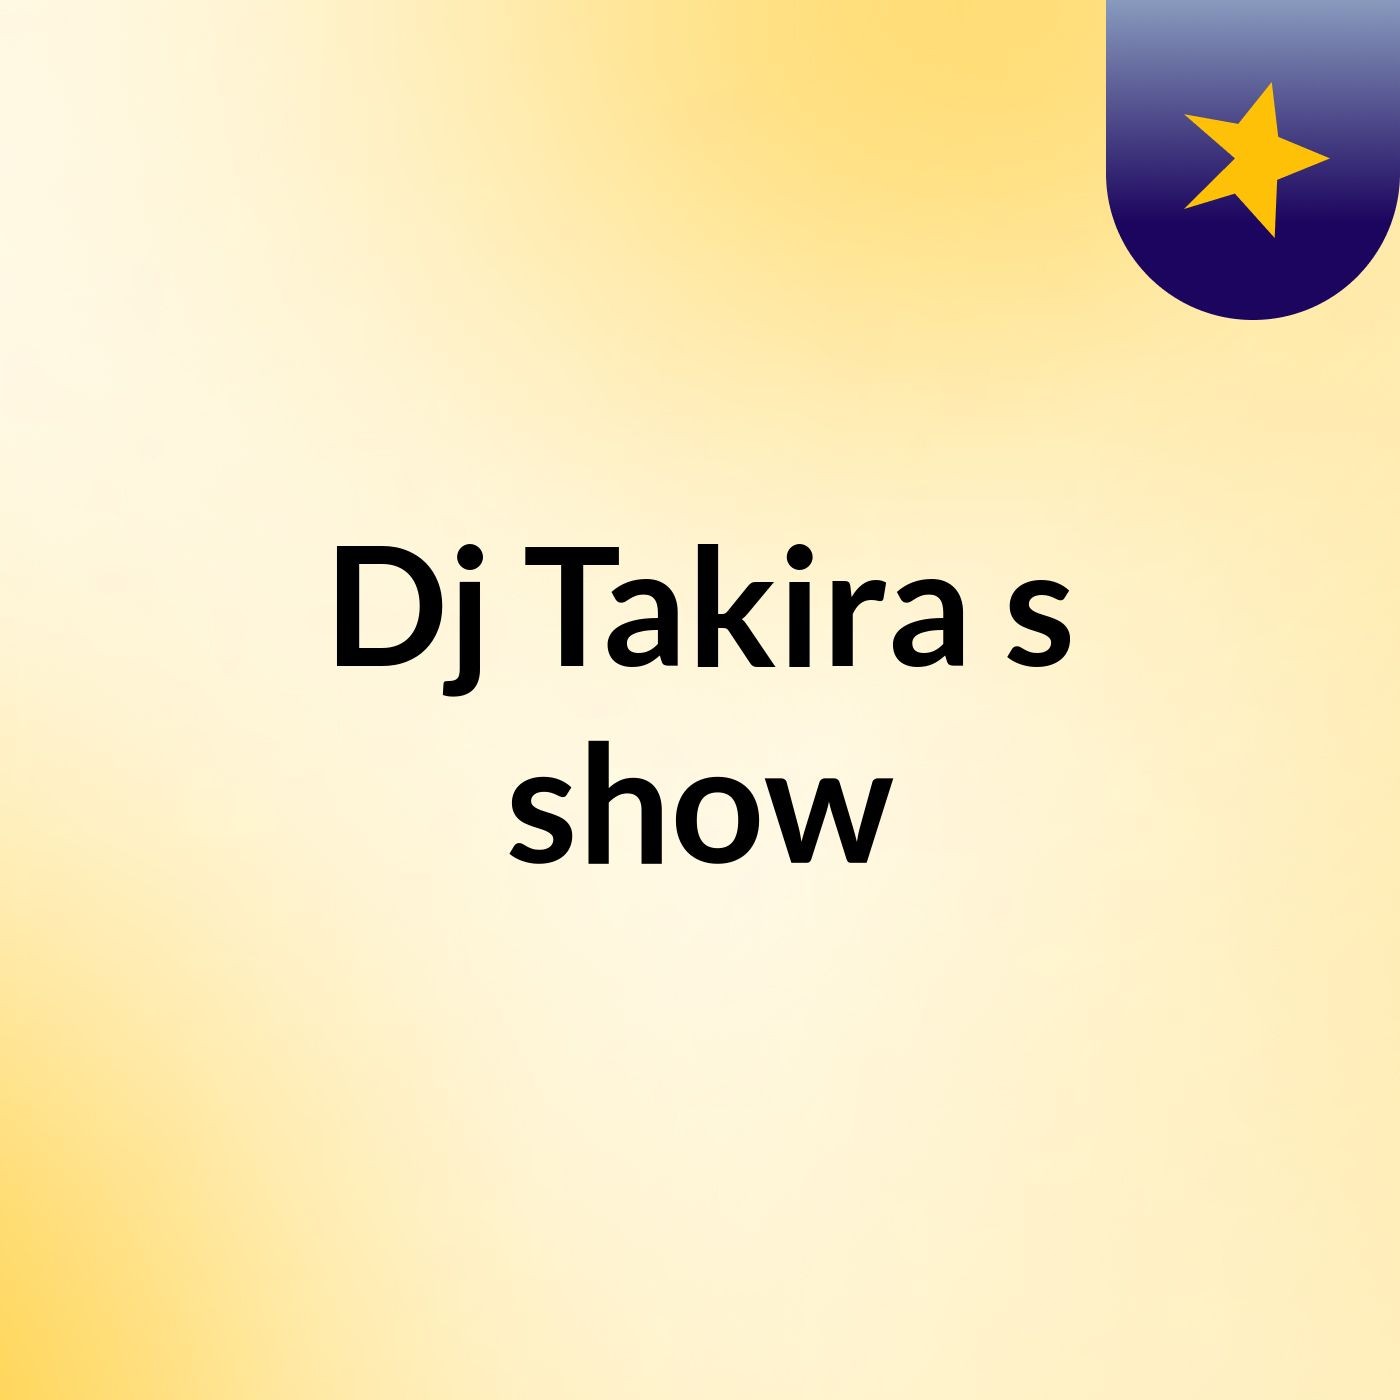 Dj Takira's show